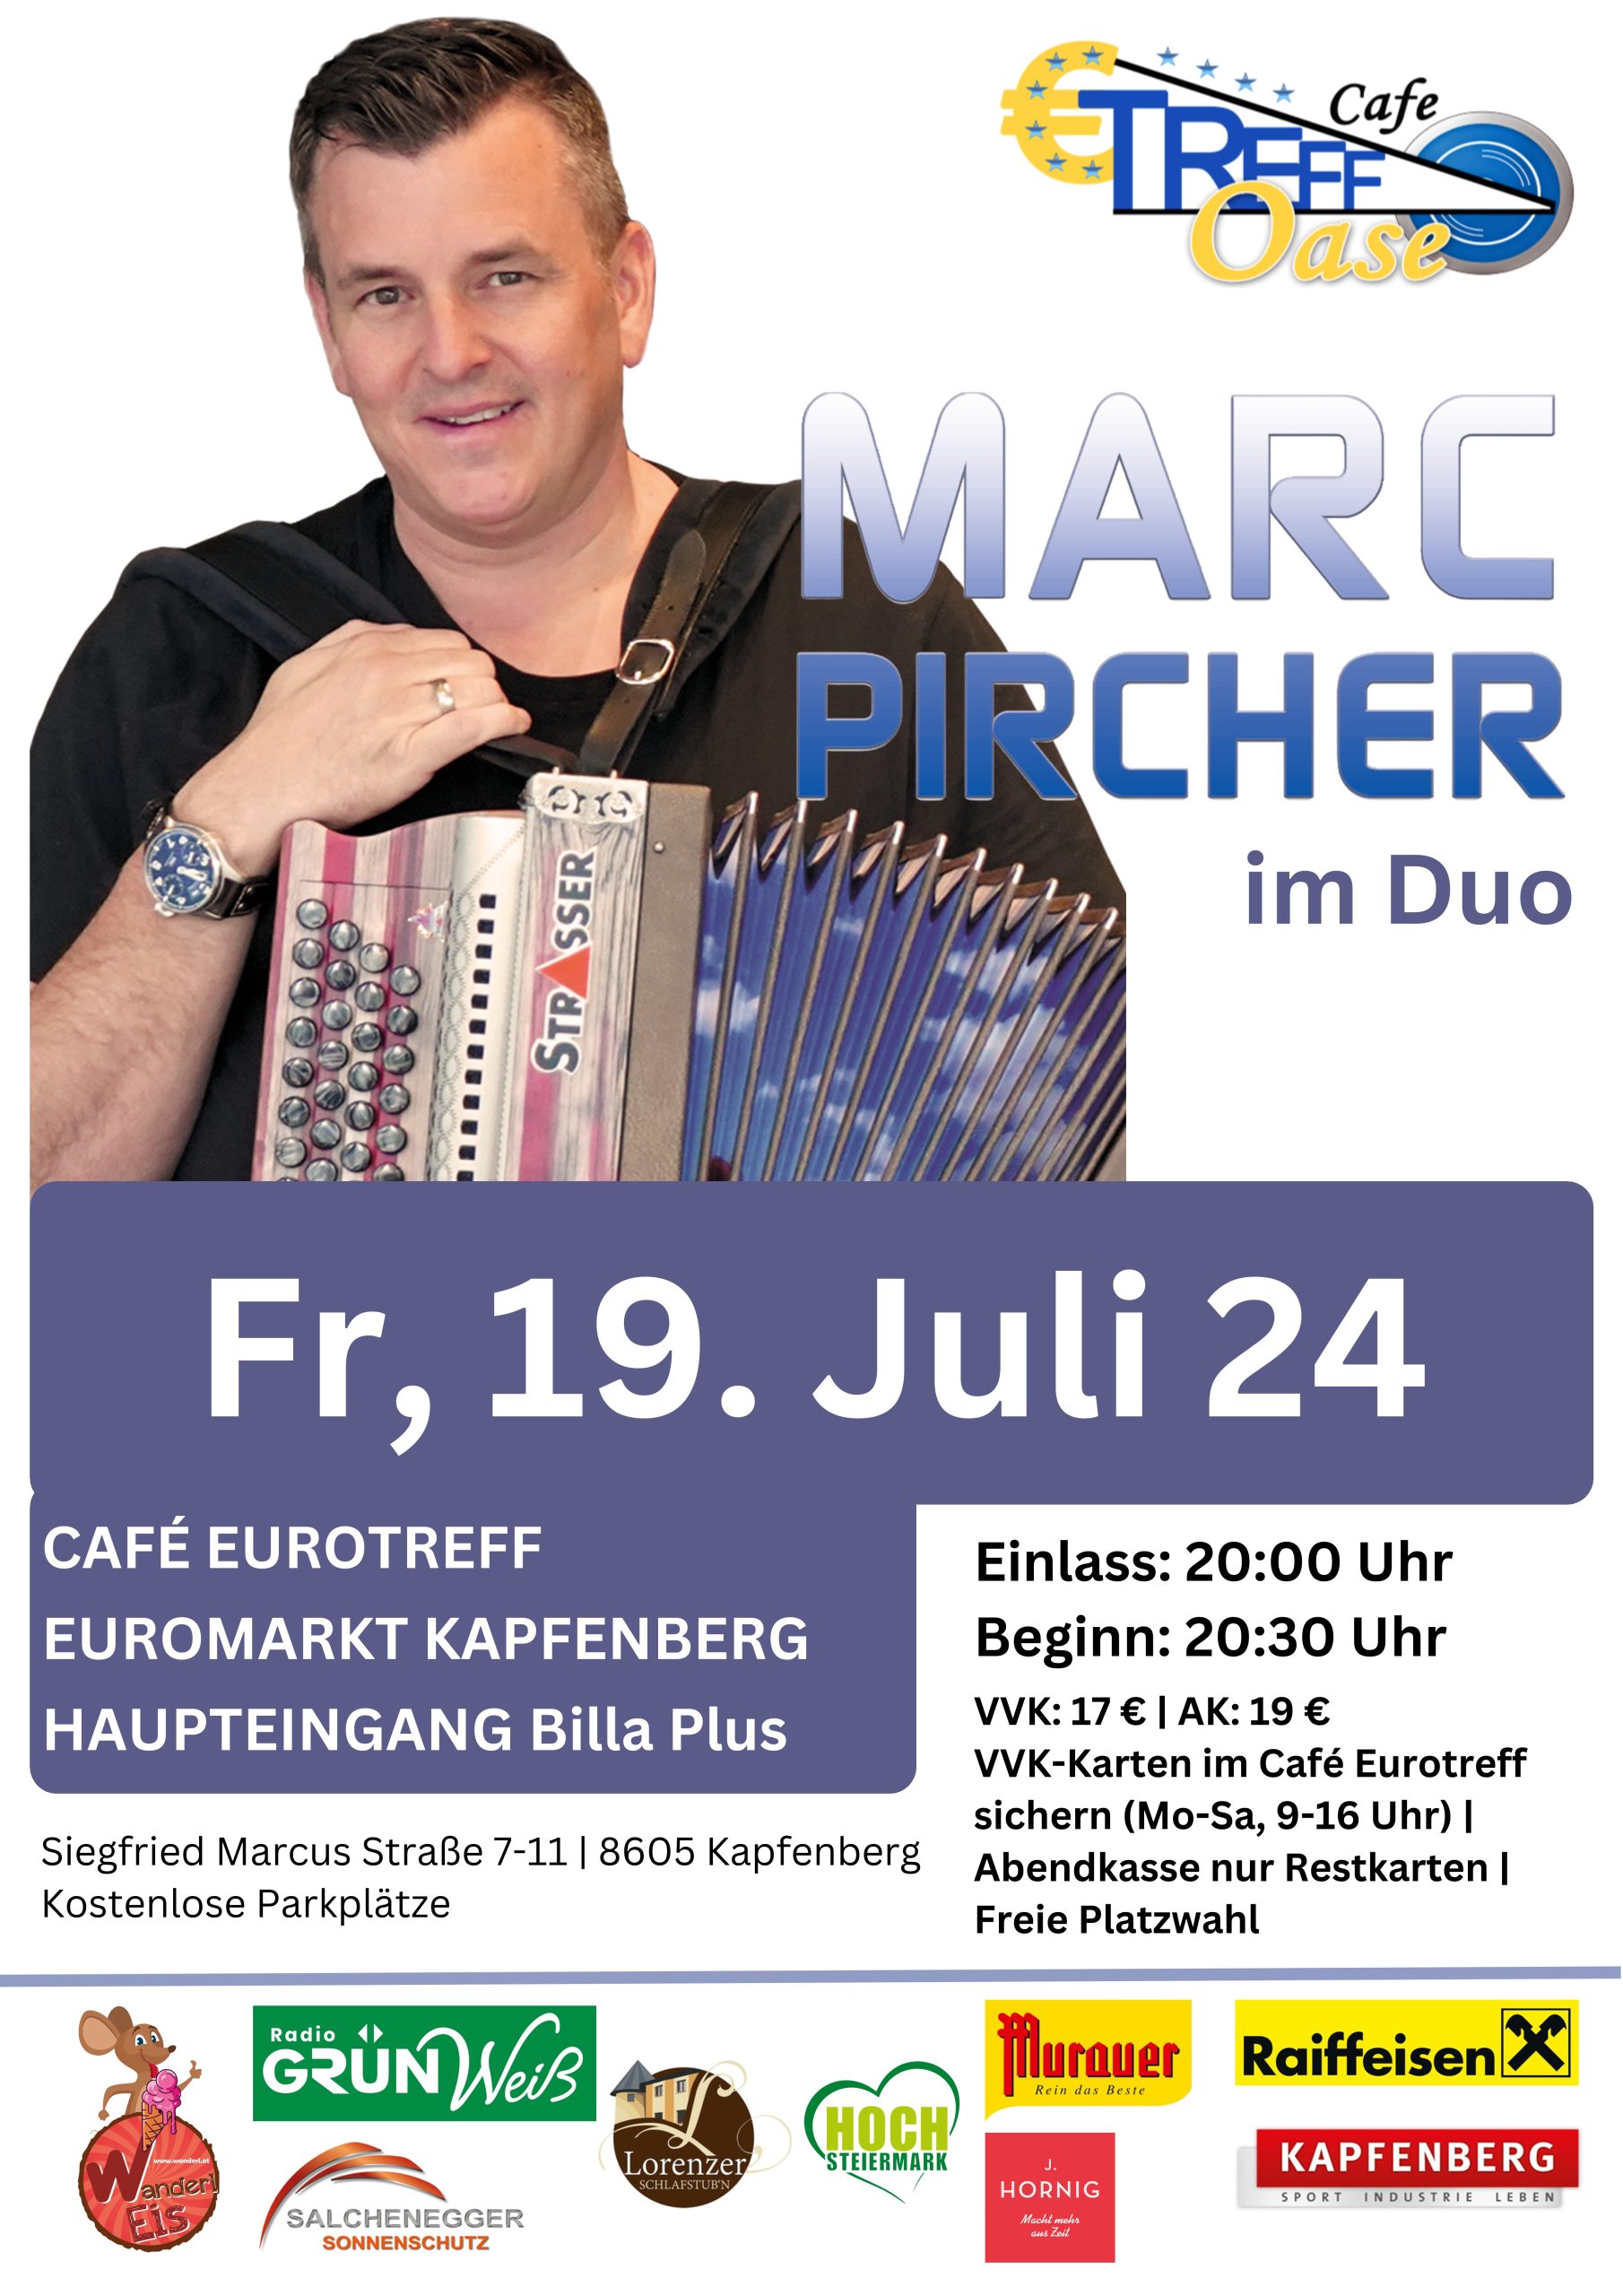 Marc Pircher im Duo